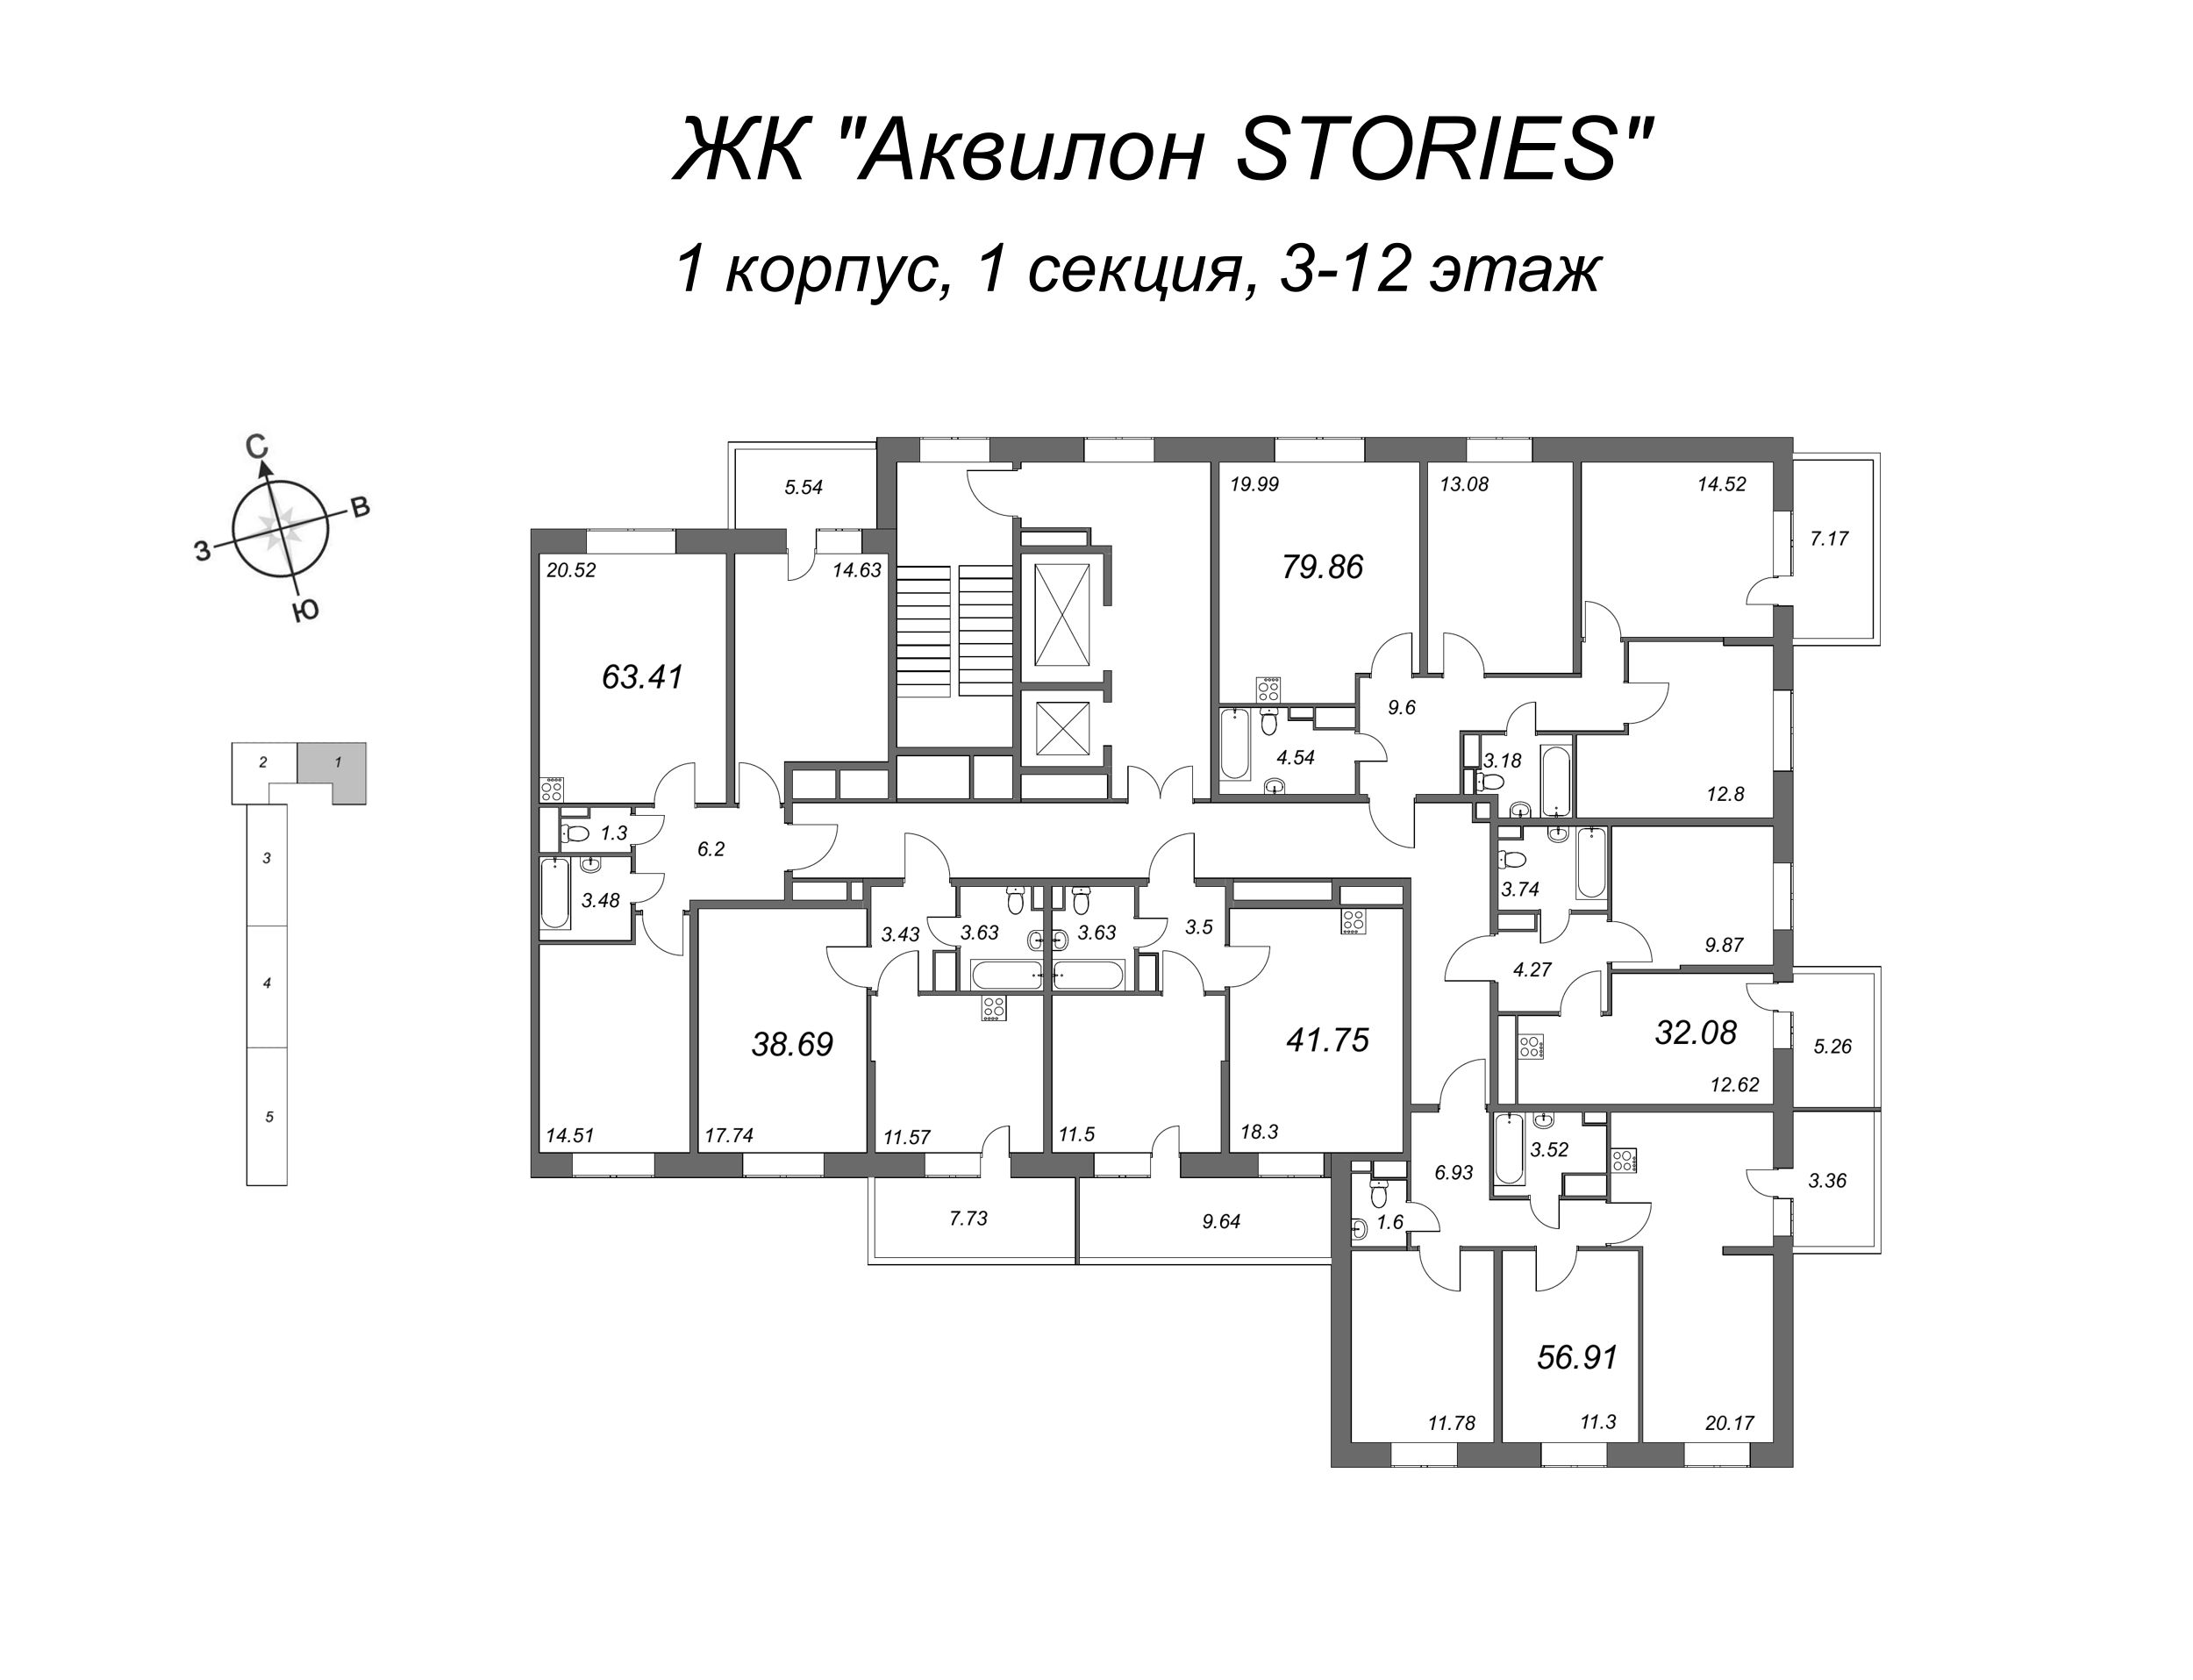 4-комнатная (Евро) квартира, 79.86 м² - планировка этажа